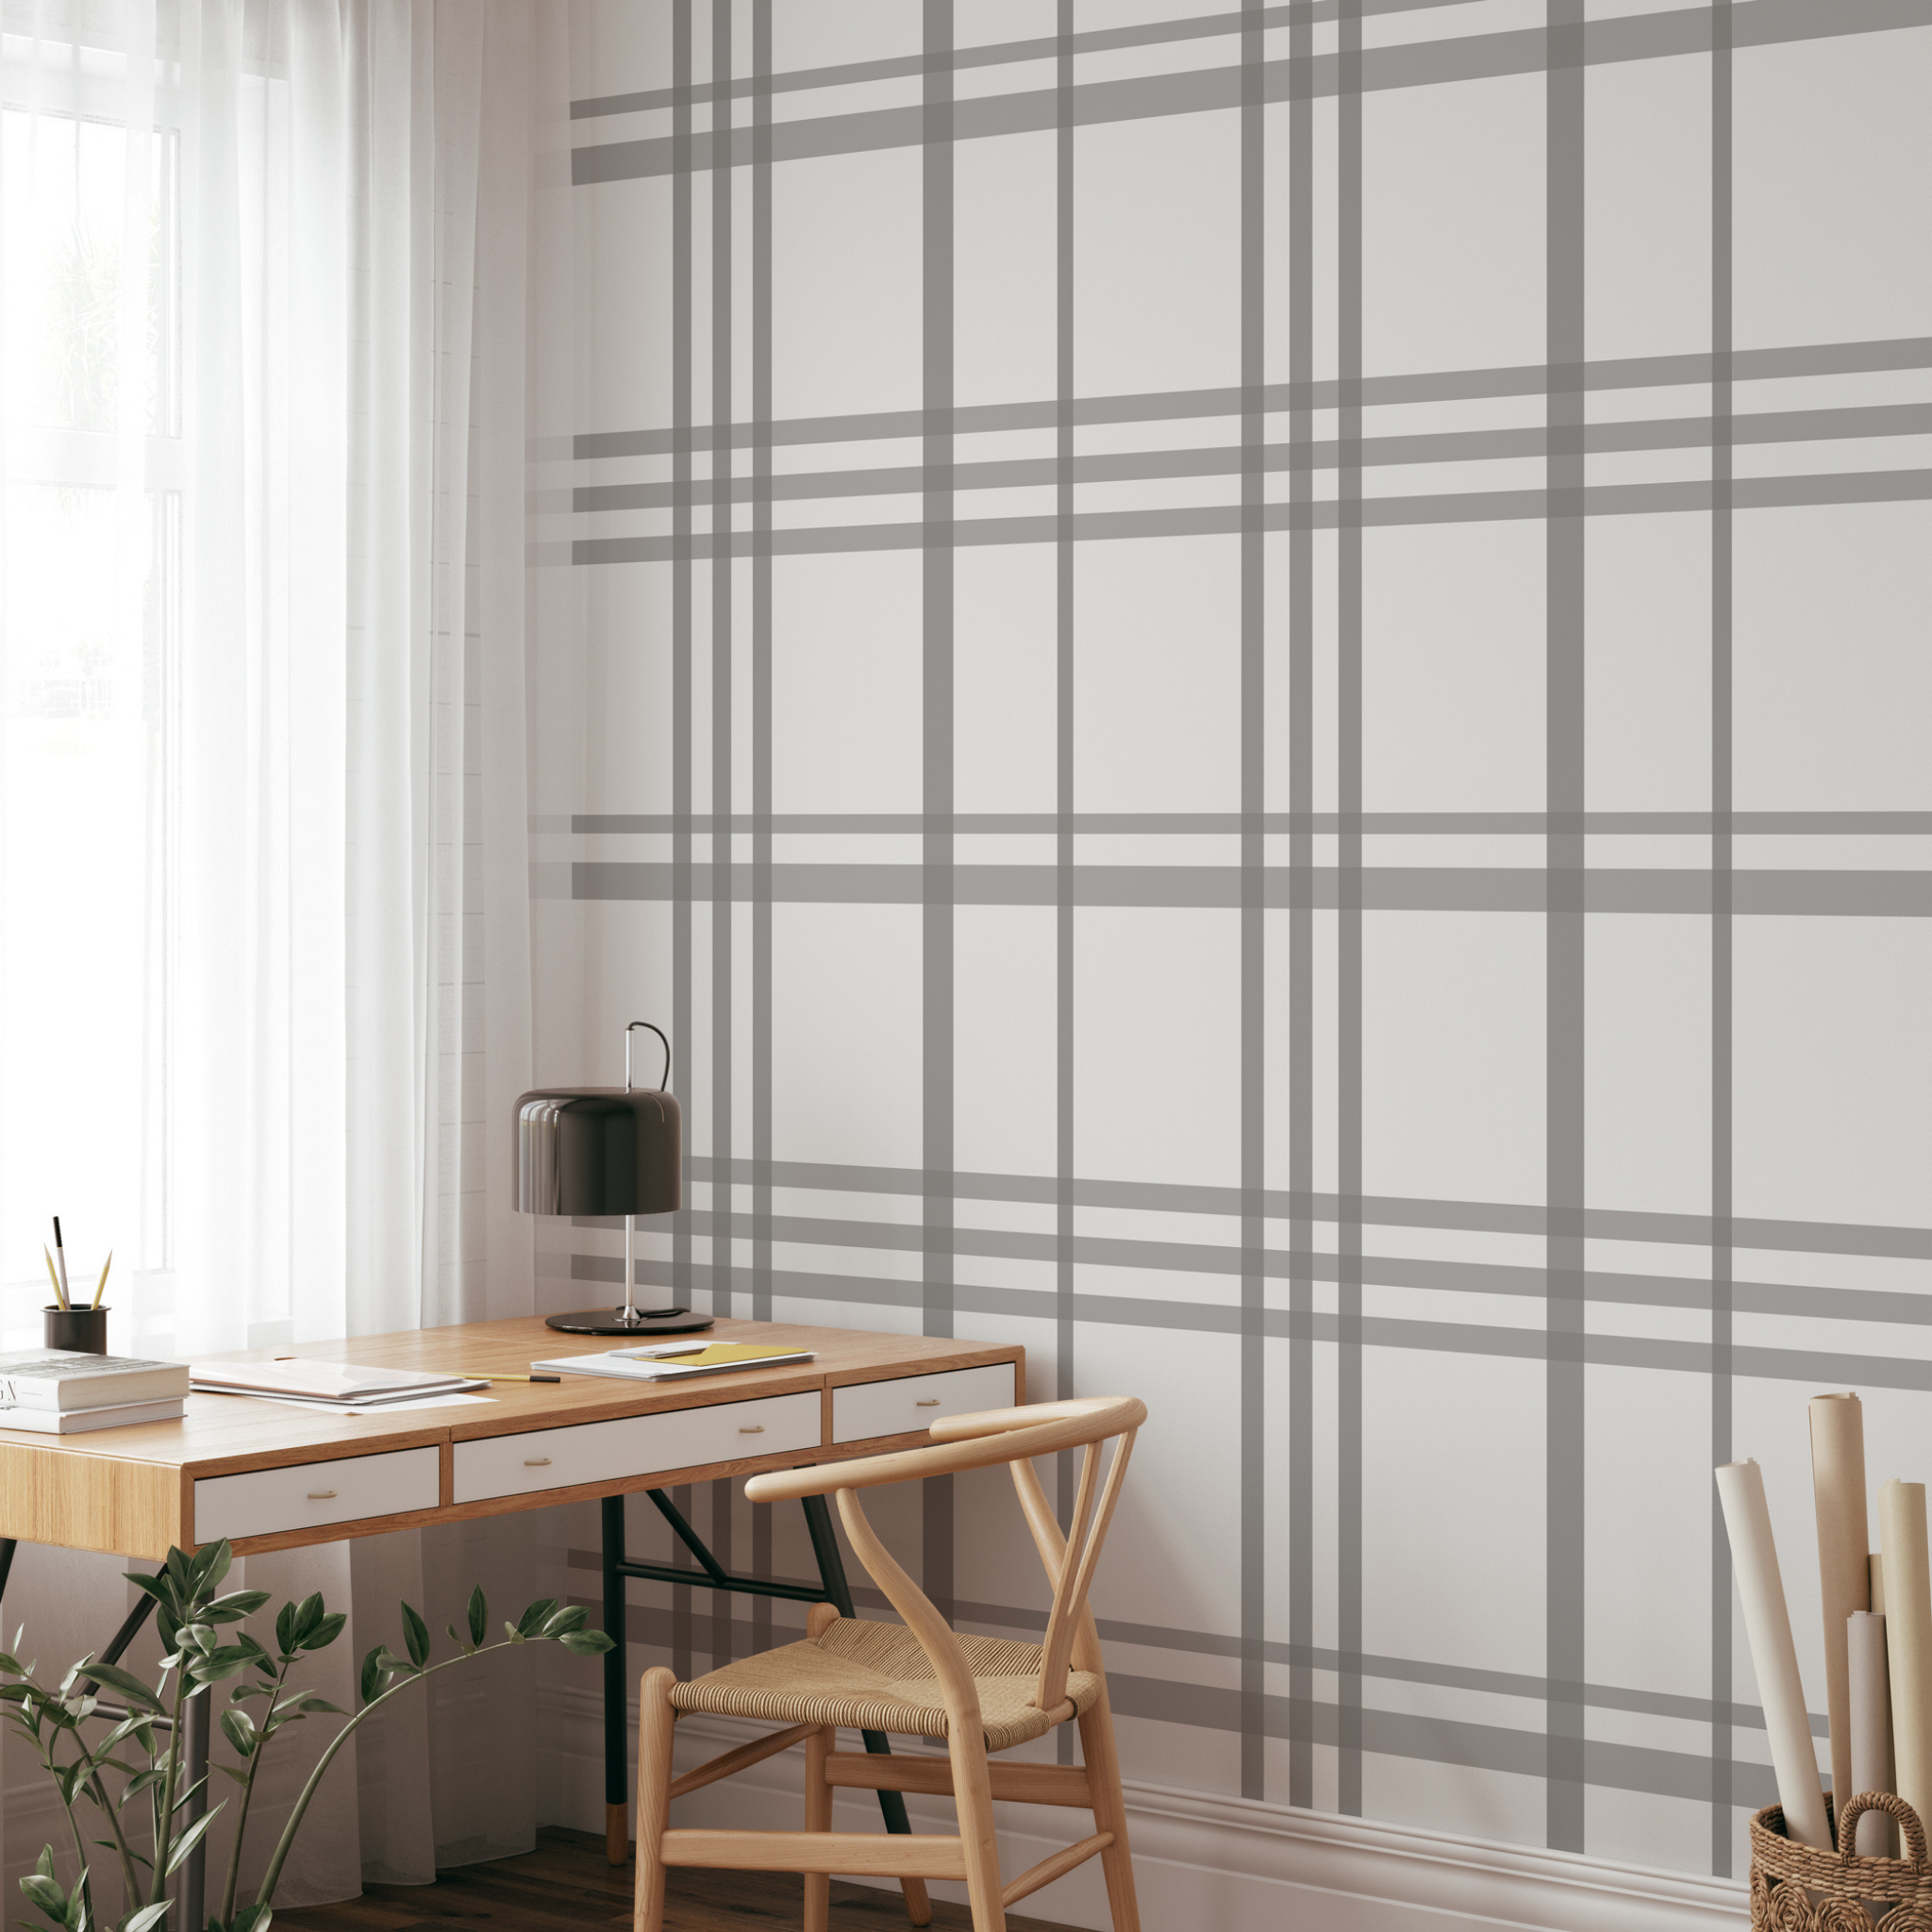 "Carolina Wallpaper by Wall Blush in a modern home office, showcasing elegant plaid design focus."